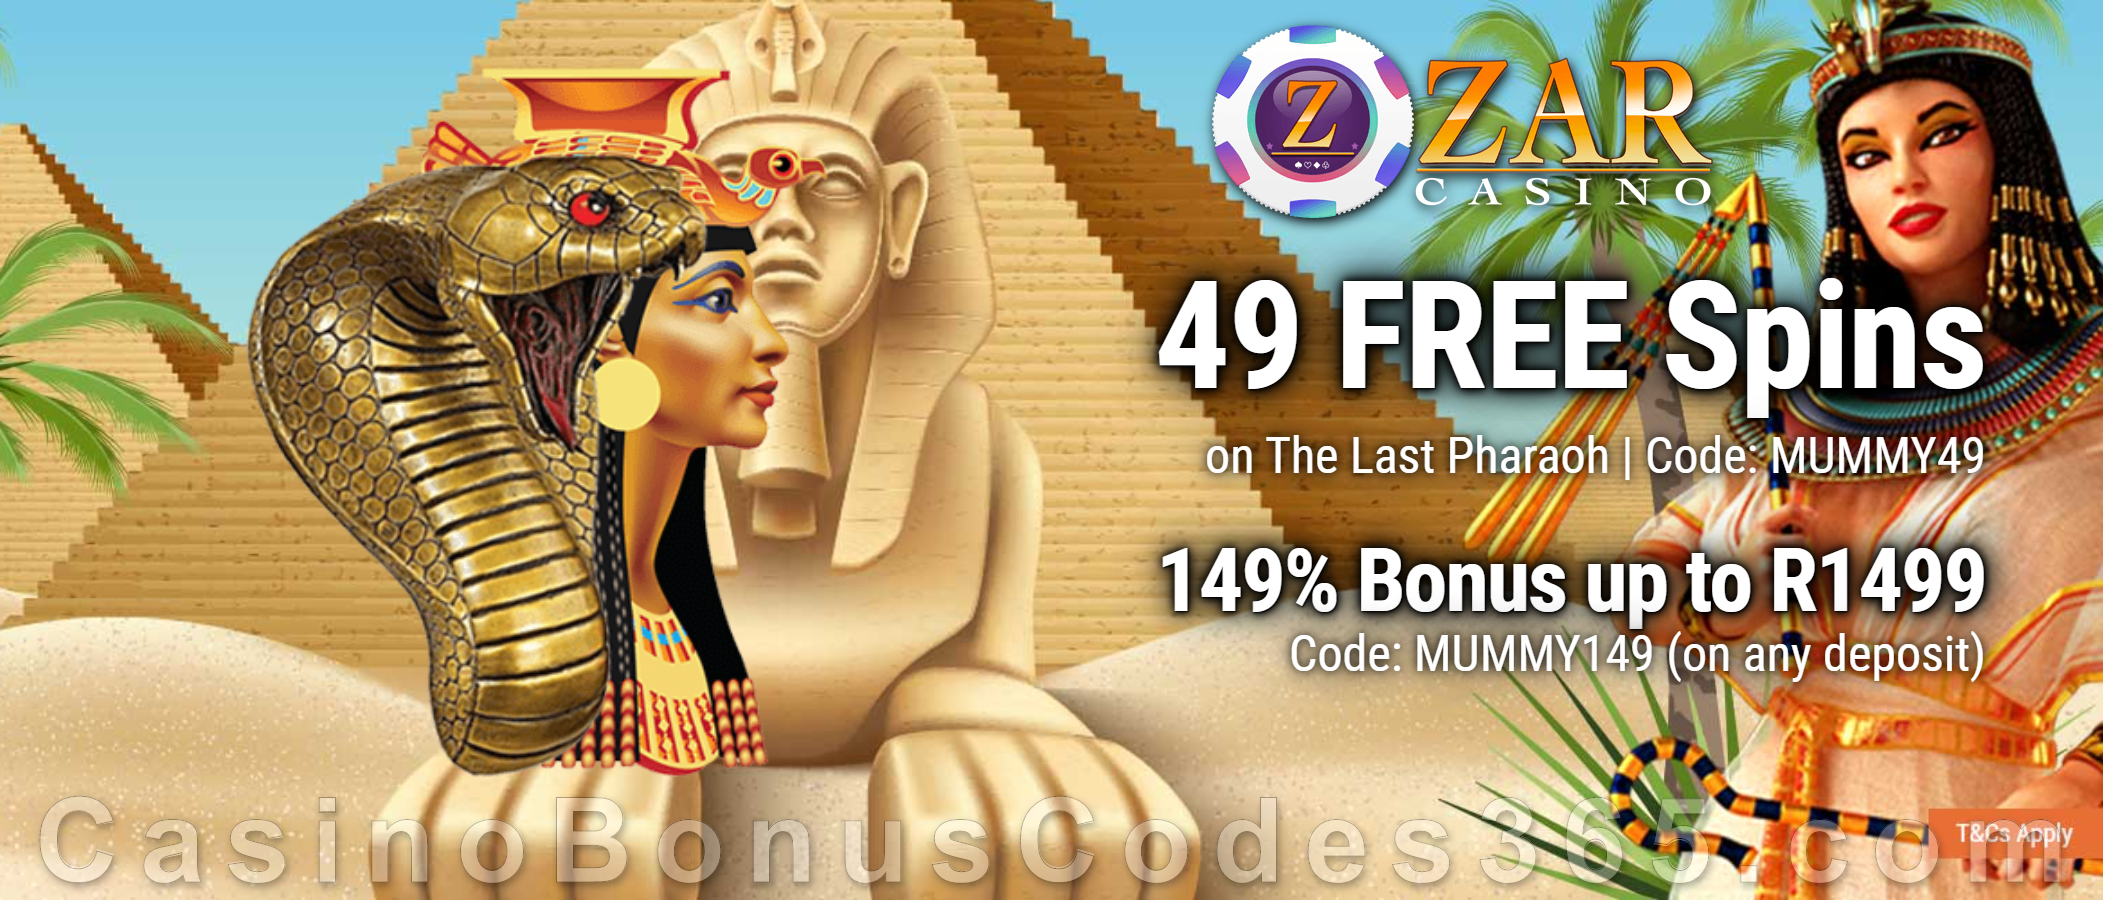 Zar casino free bonus codes 2021